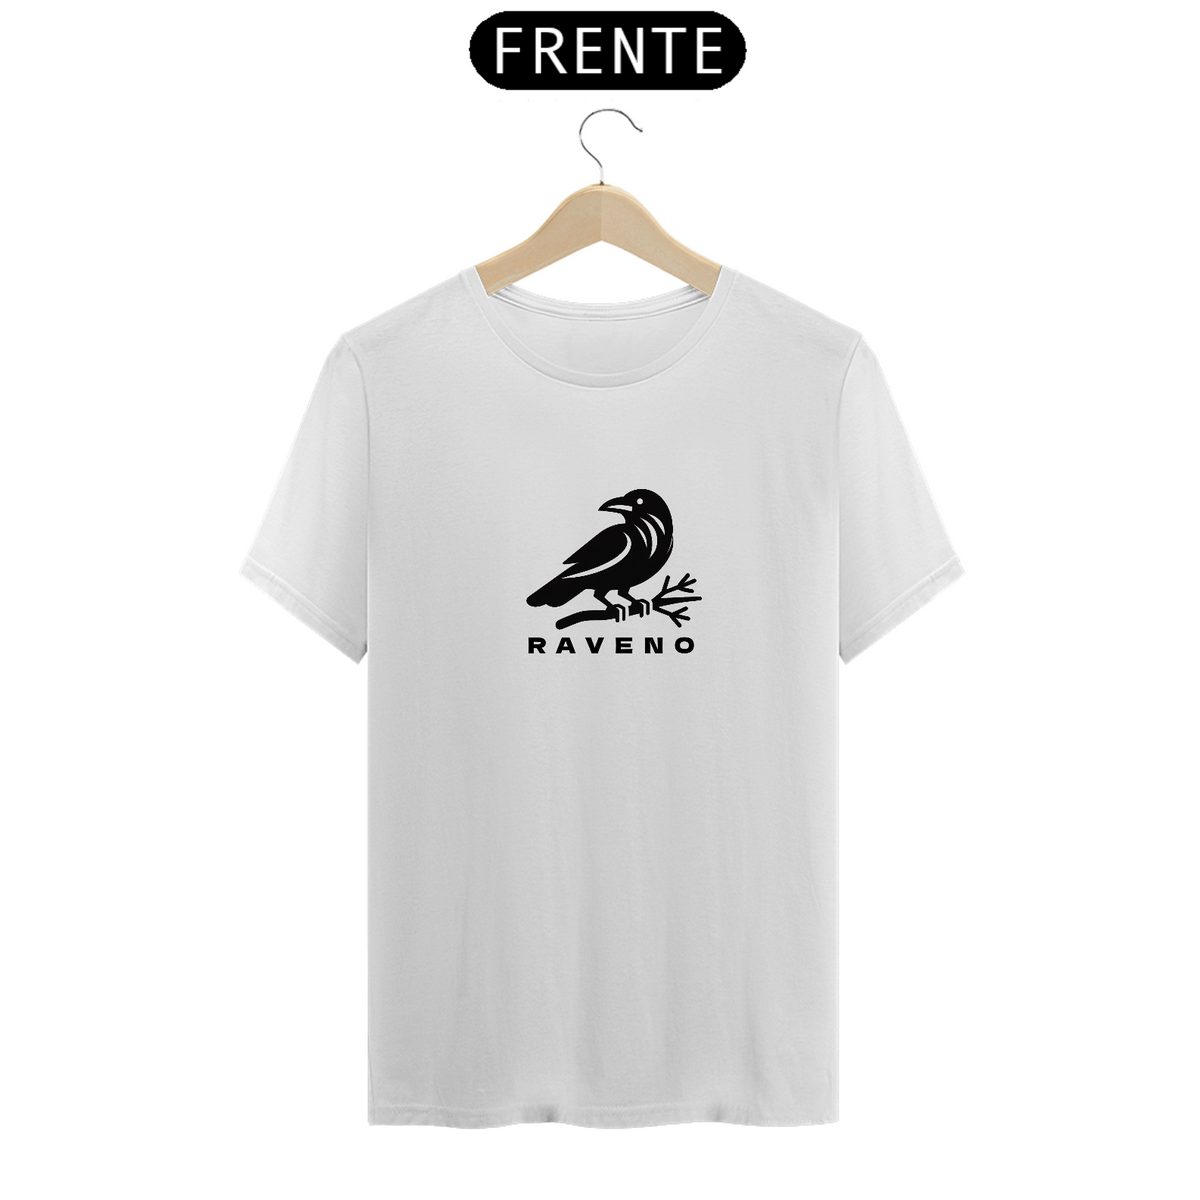 Nome do produto: Camiseta Raveno Original Preto